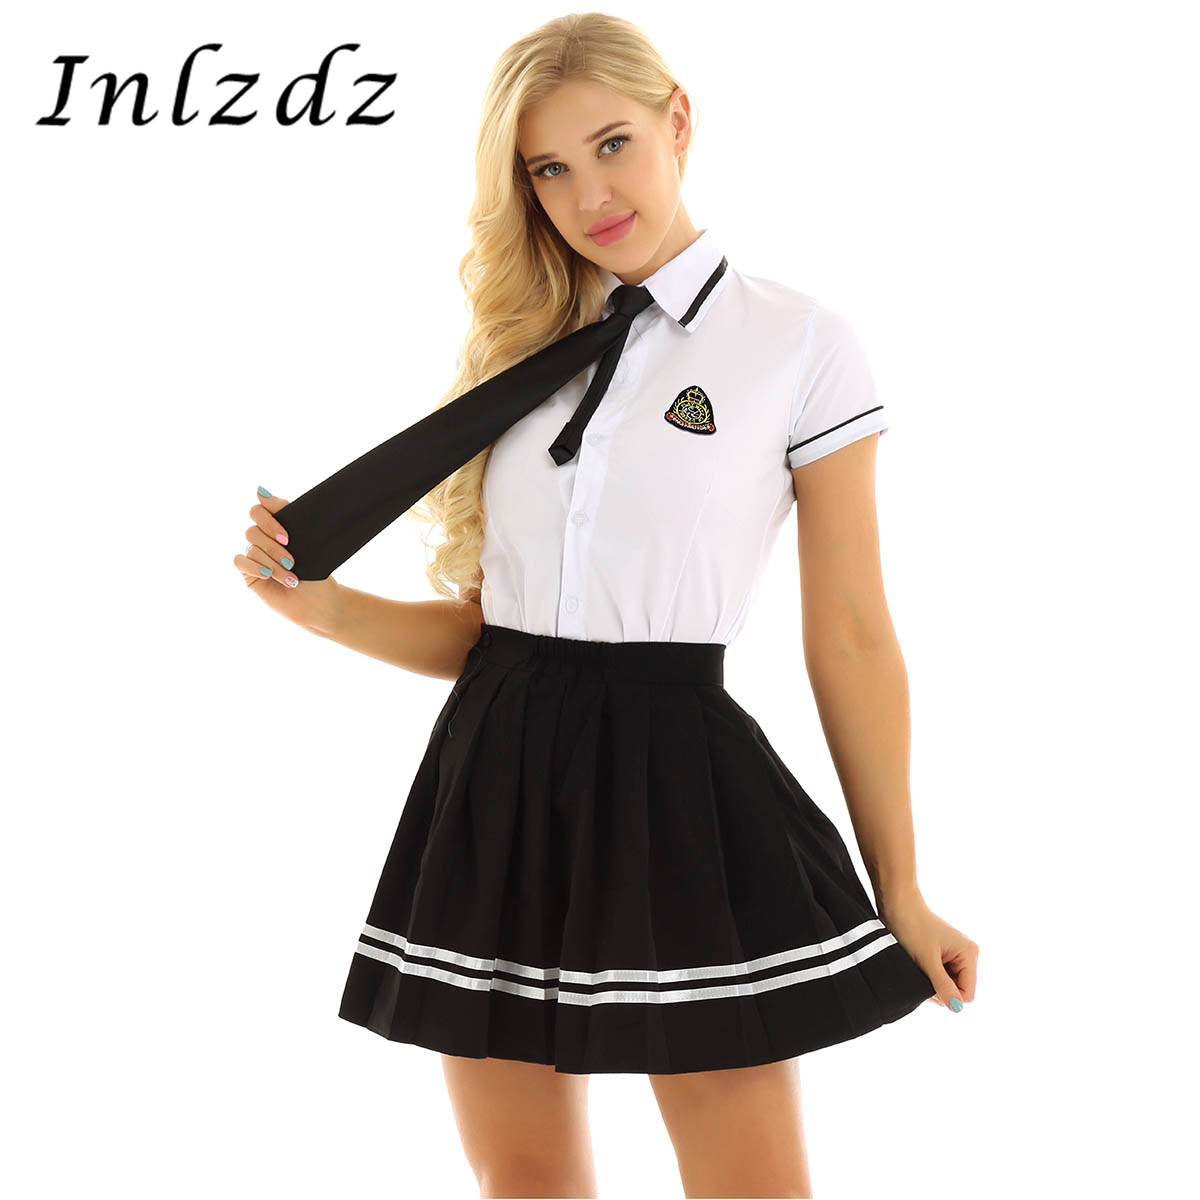 Women's Girls School Uniform Suit Short Sleeve T-shirt Top School Skirts with Badge and Tie Set High School Cosplay Clothing